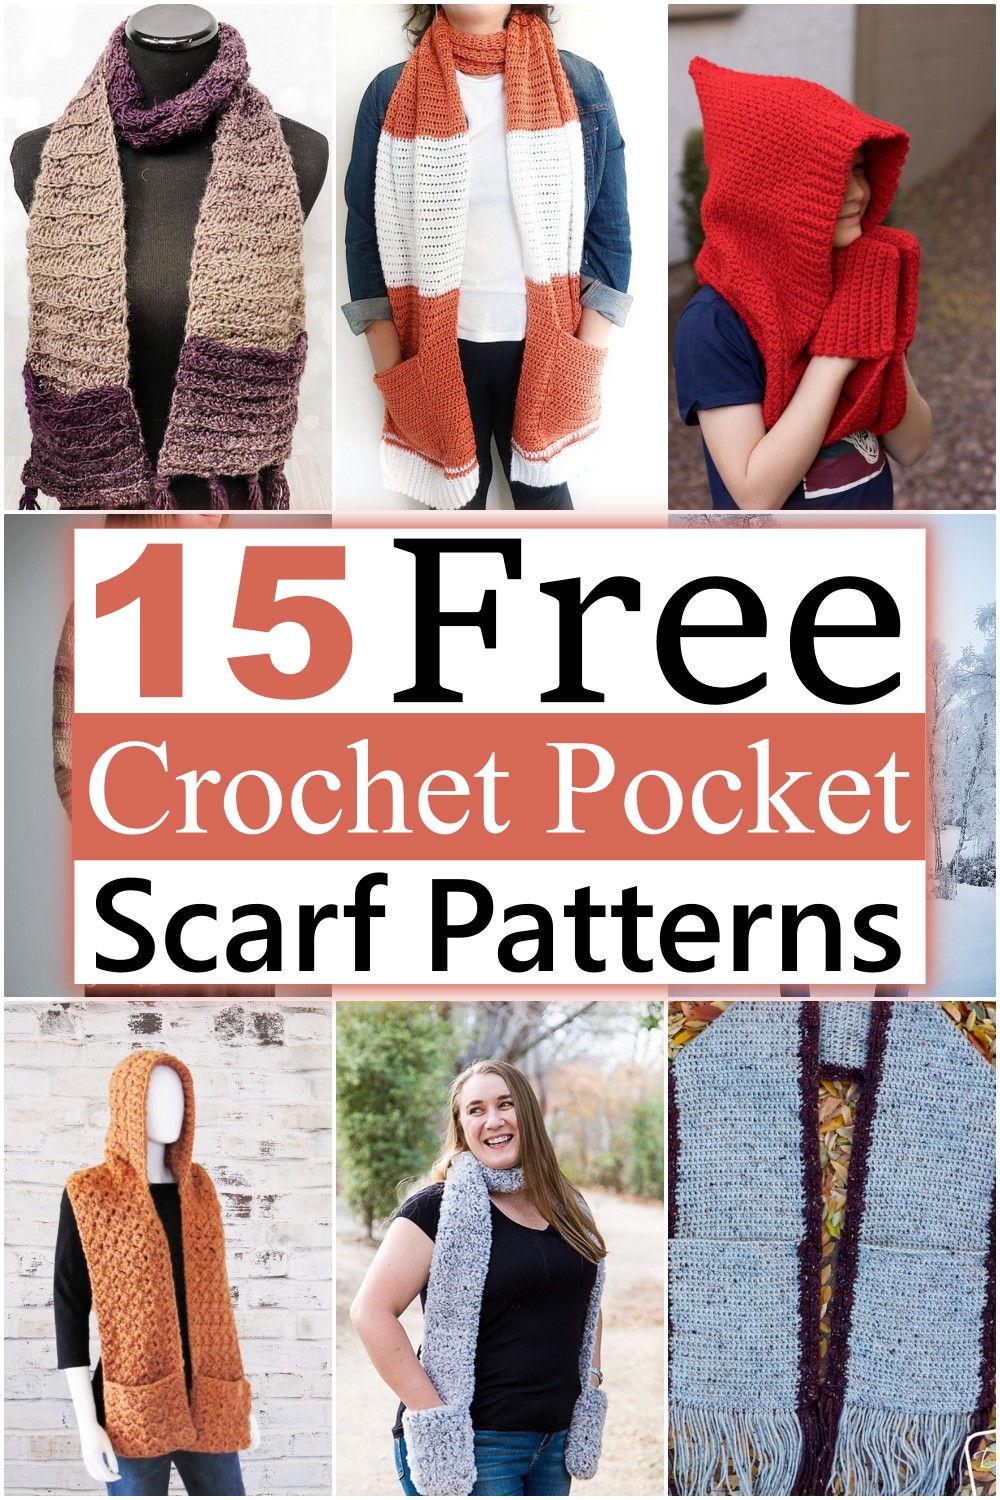 Crochet Pocket Scarf Patterns 